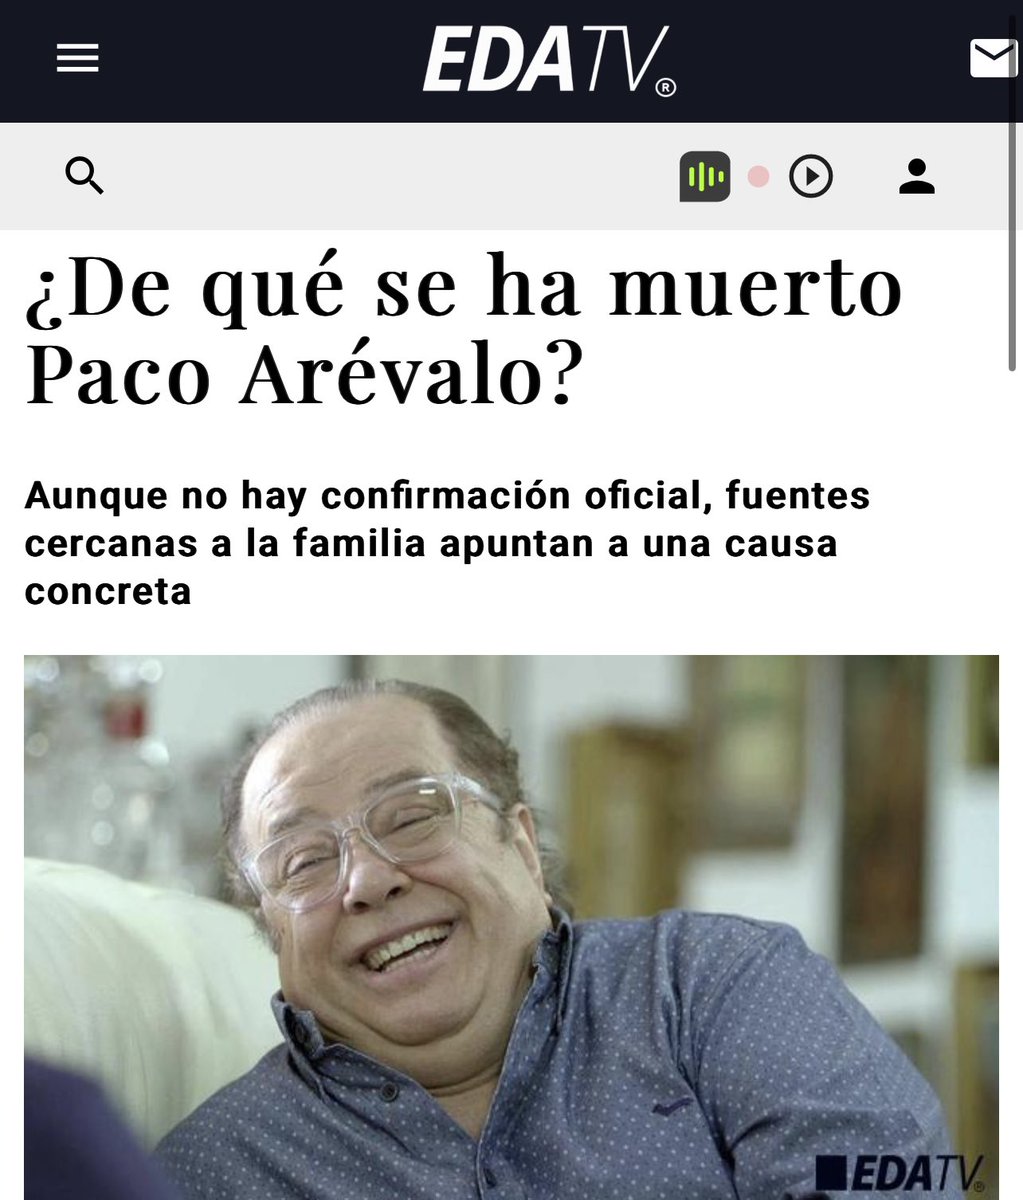 La causa de la muerte de Paco Arévalo edatv.news/noticias/56417…